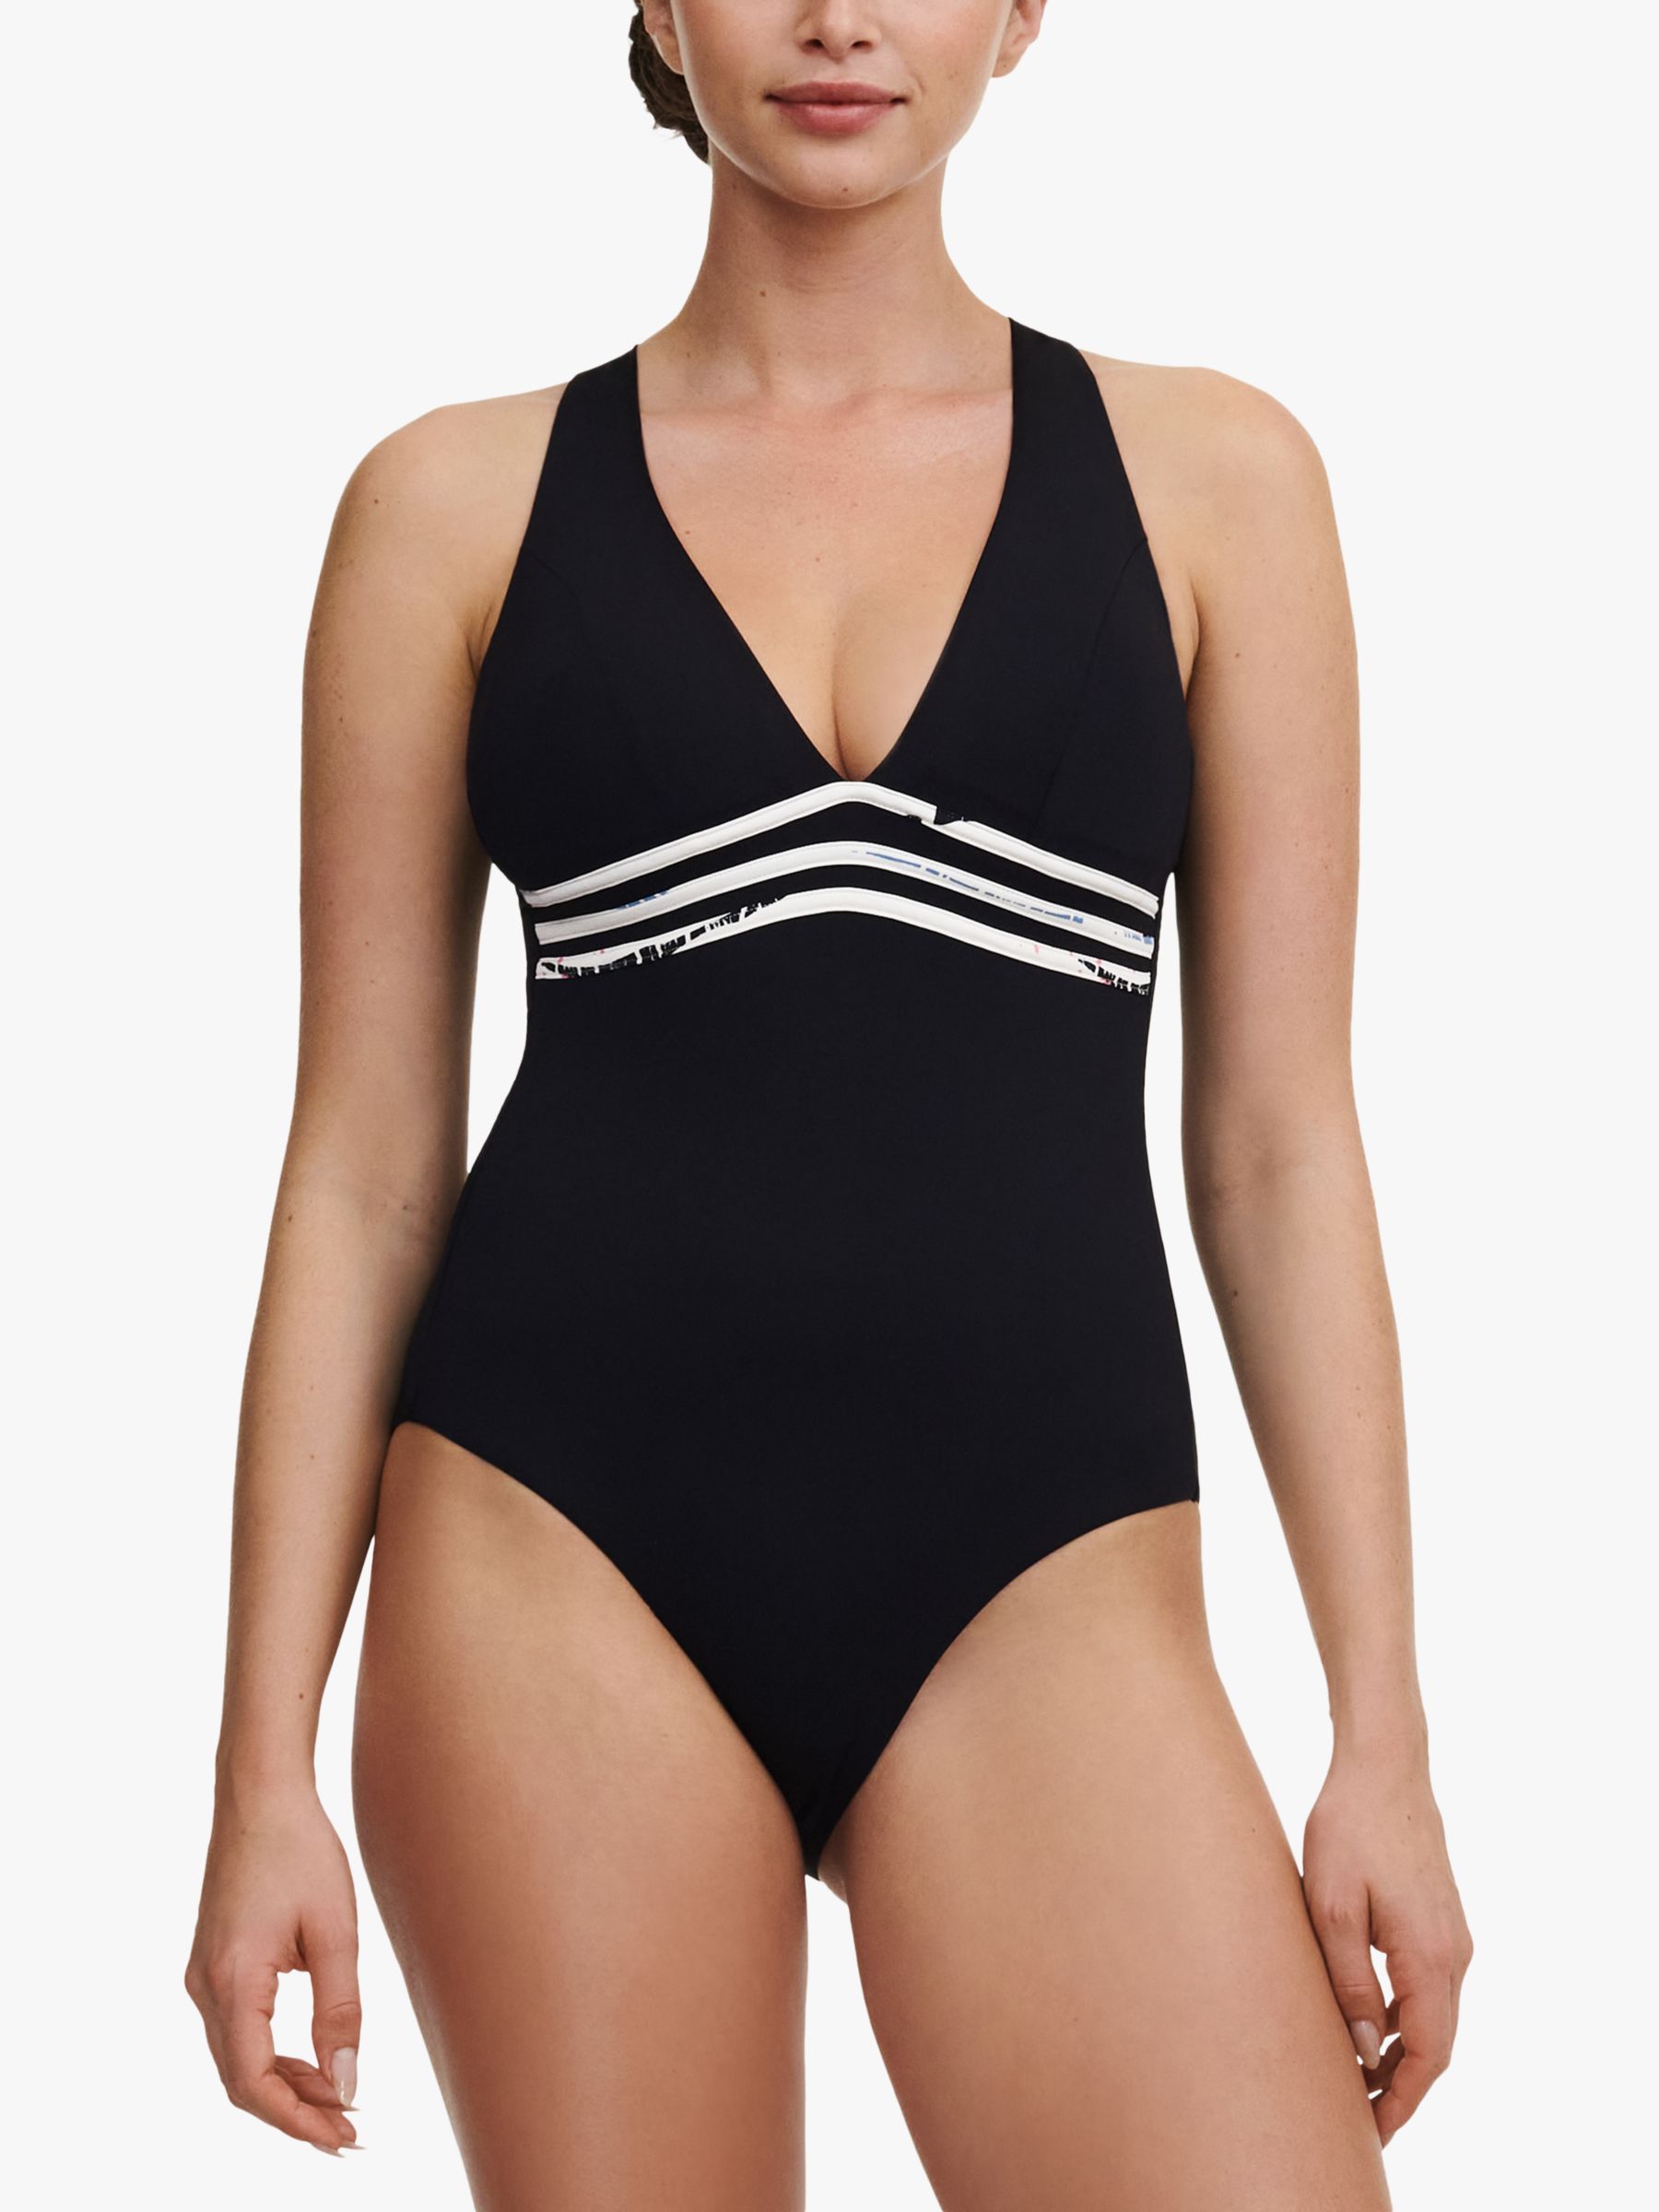 Femilet Maui Plunge Swimsuit, Black/White, S